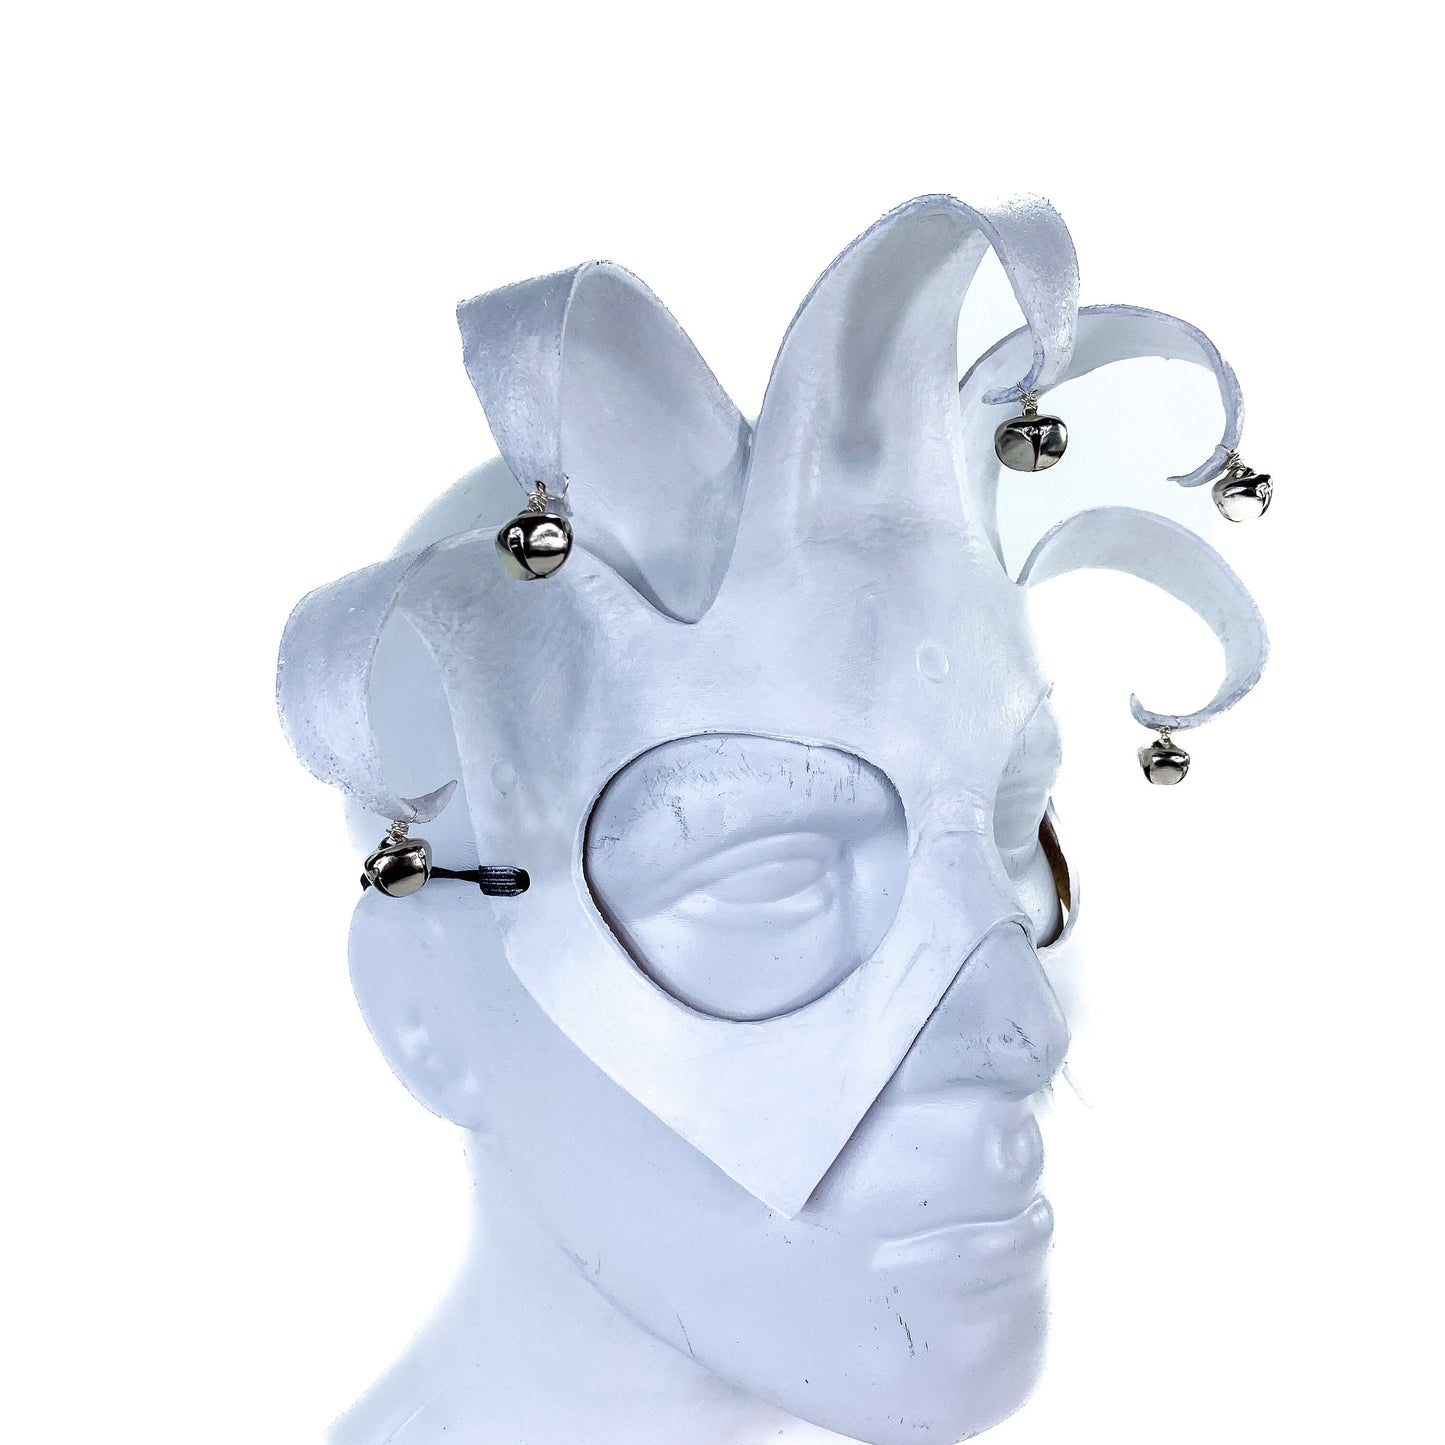 Handmade Genuine Leather Five Point Minimalist Jester Mask in White